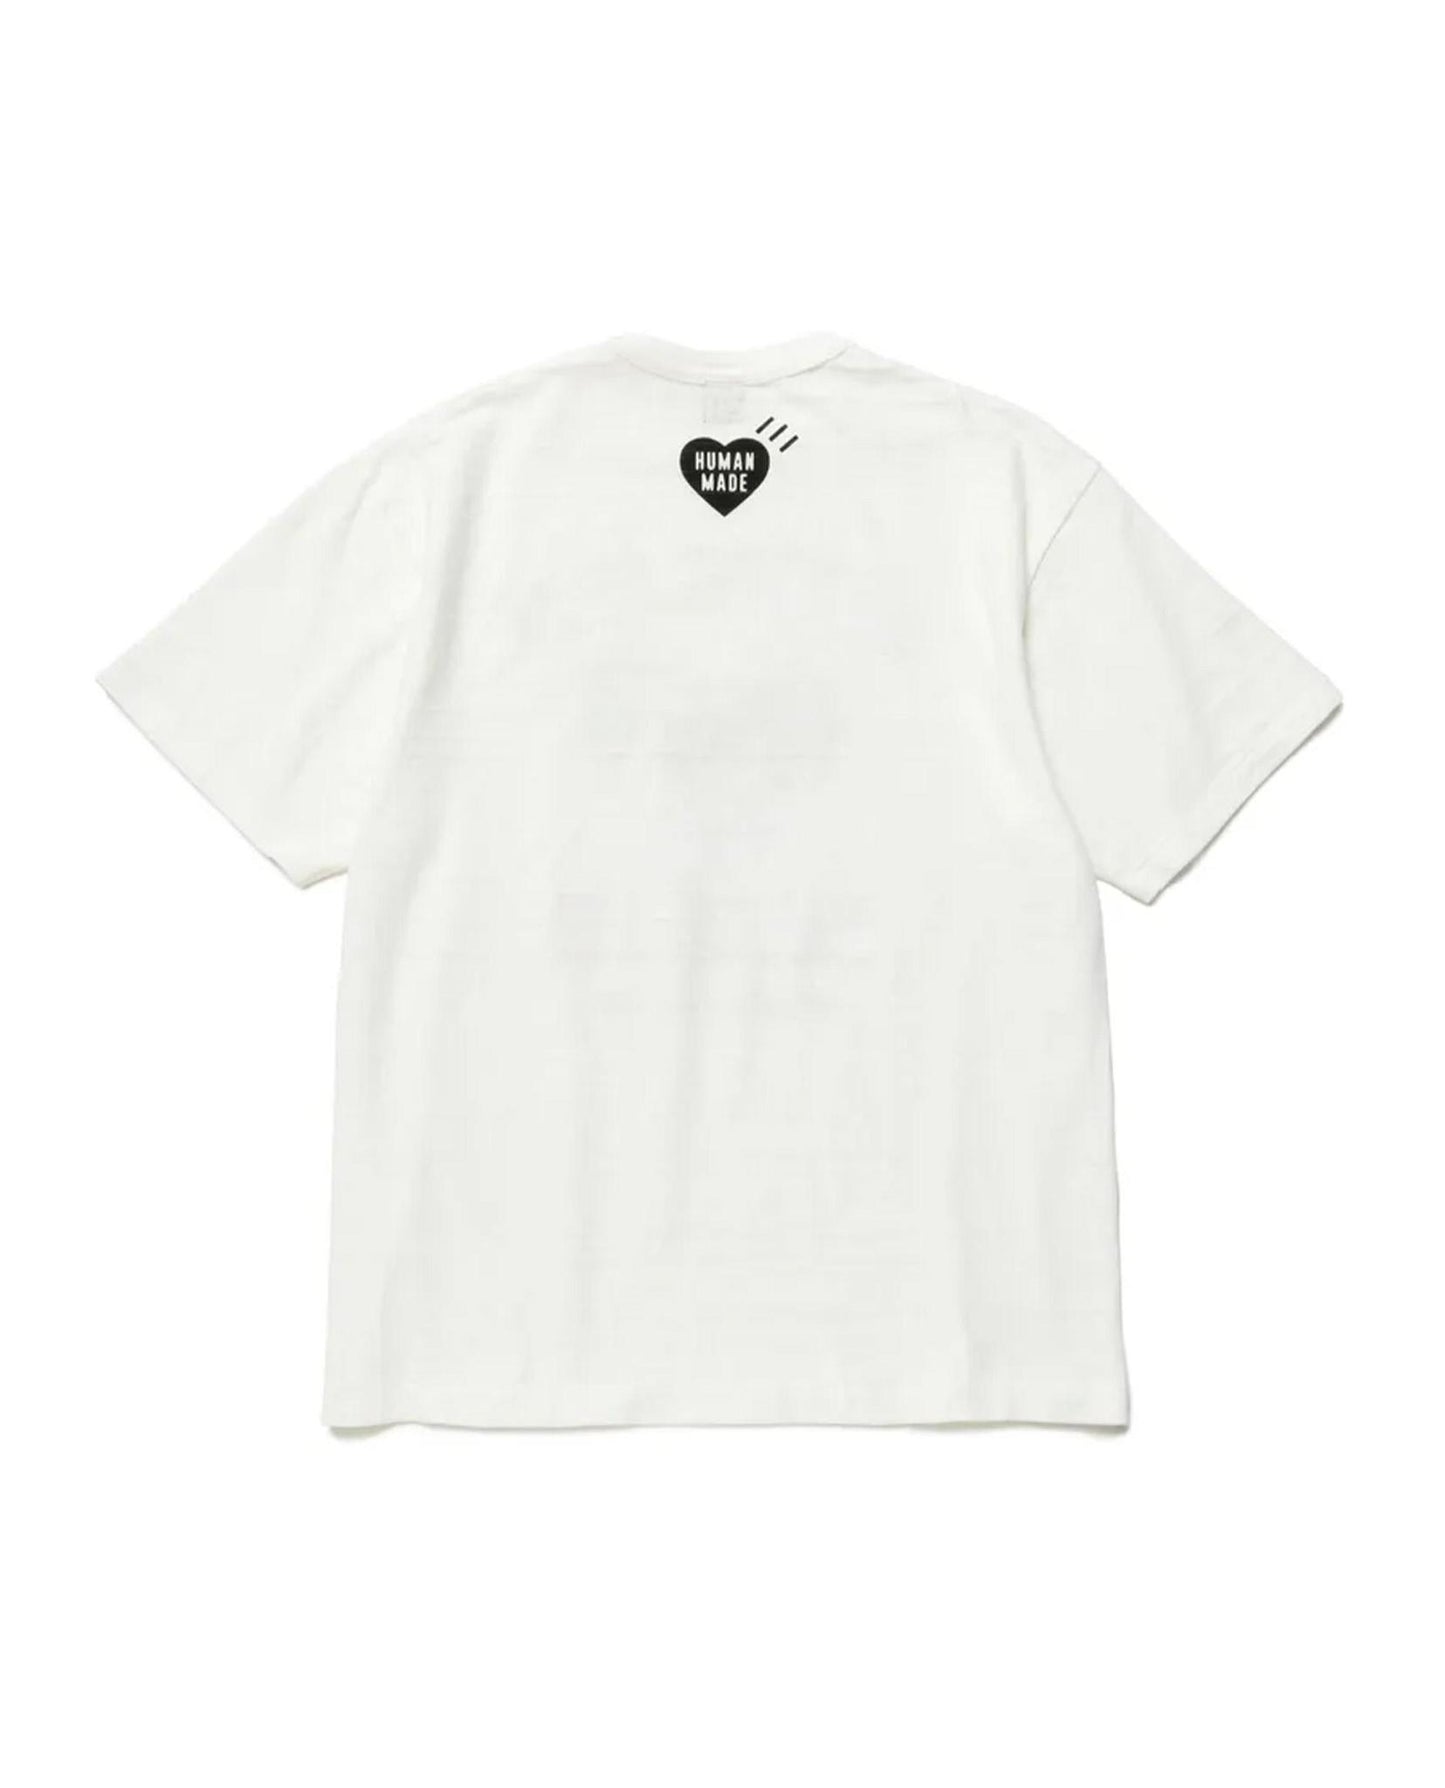 Human Made Graphic T-Shirt #10 | STASHED